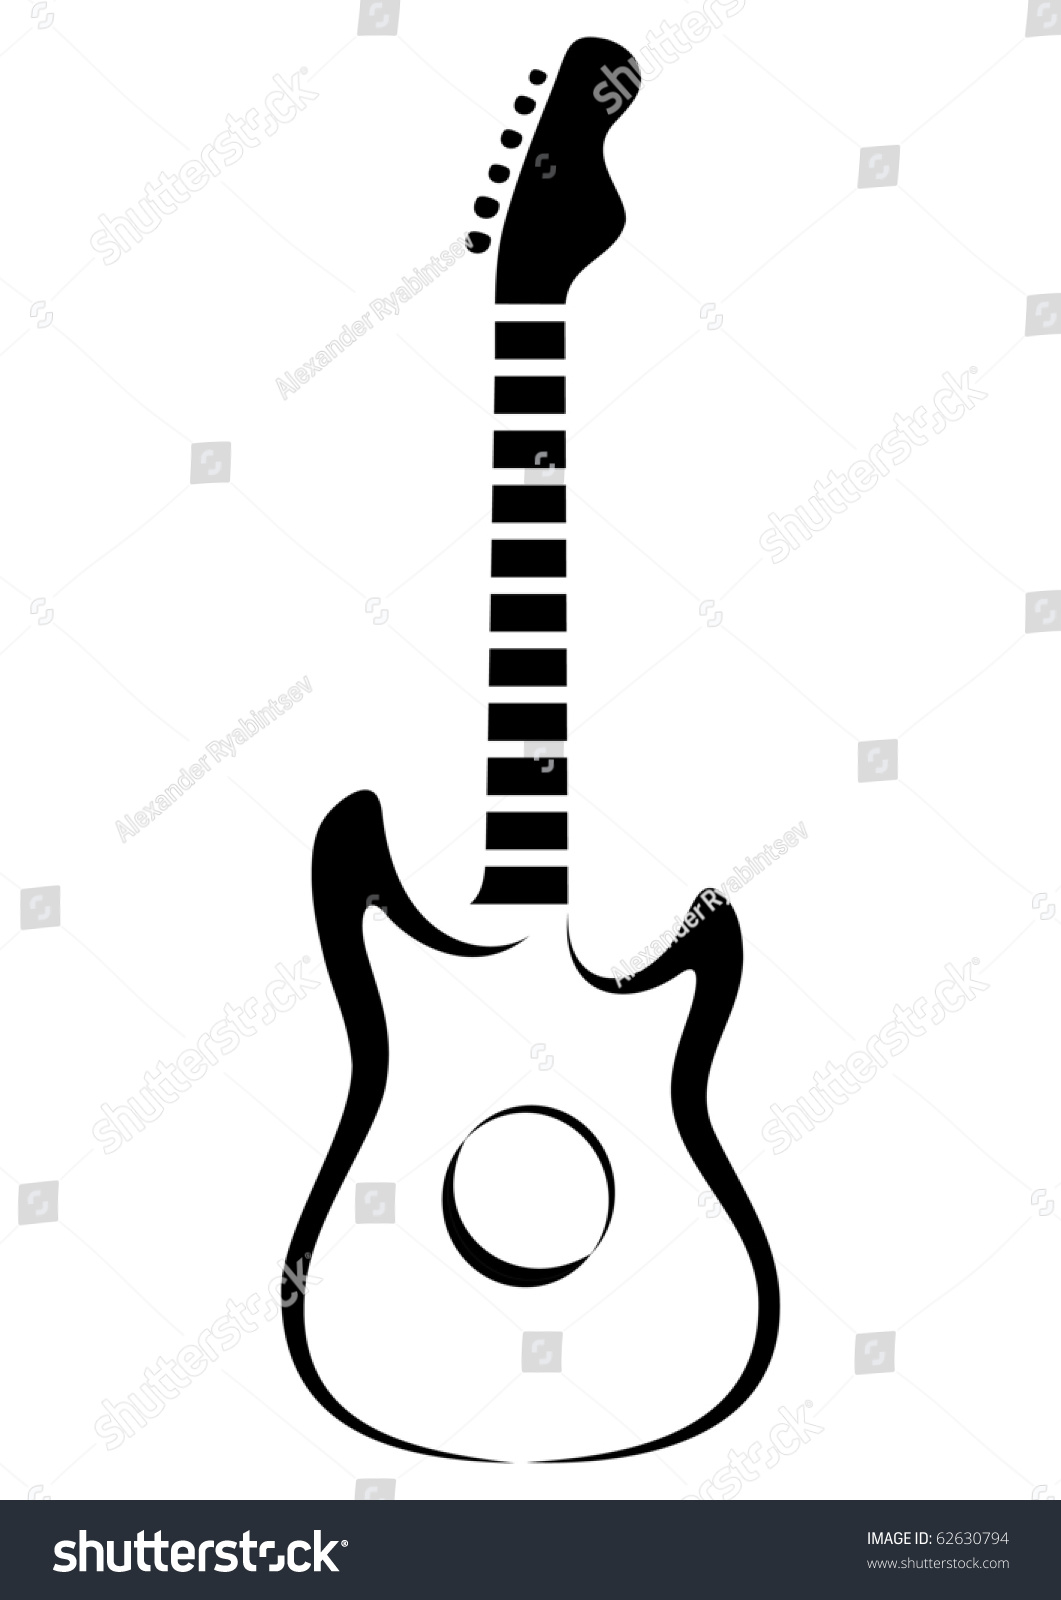 Illustration Of Guitar - 62630794 : Shutterstock